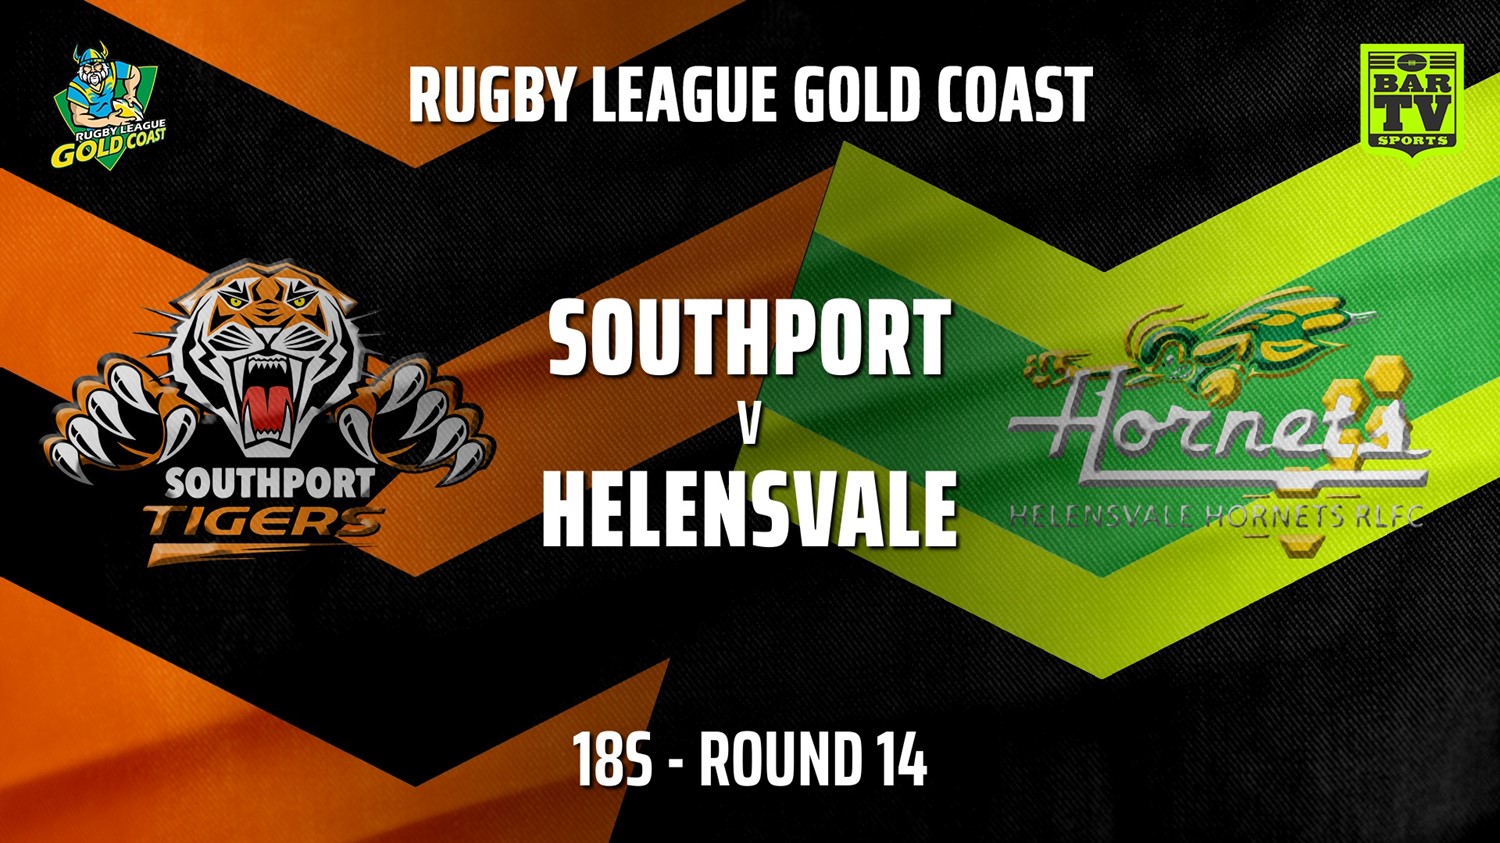 210918-Gold Coast Round 14 - 18s - Southport Tigers v Helensvale Hornets Slate Image